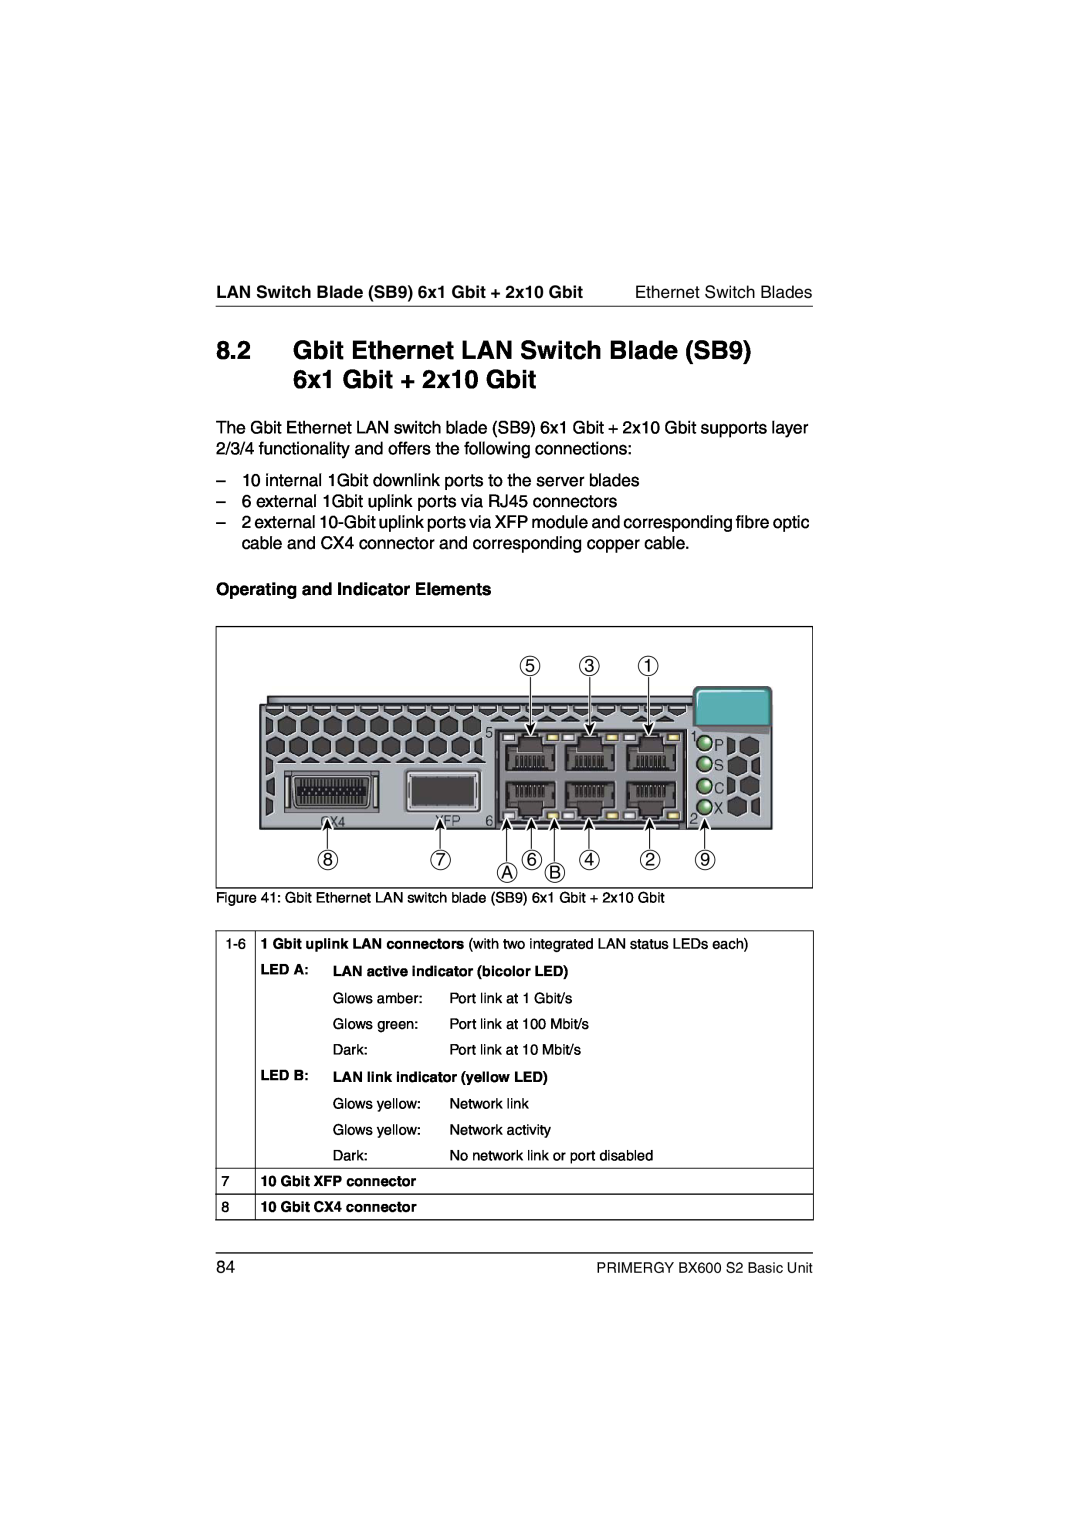 Fujitsu BX600 S2 manual Gbit Ethernet LAN Switch Blade SB9 6x1 Gbit + 2x10 Gbit, Operating and Indicator Elements 